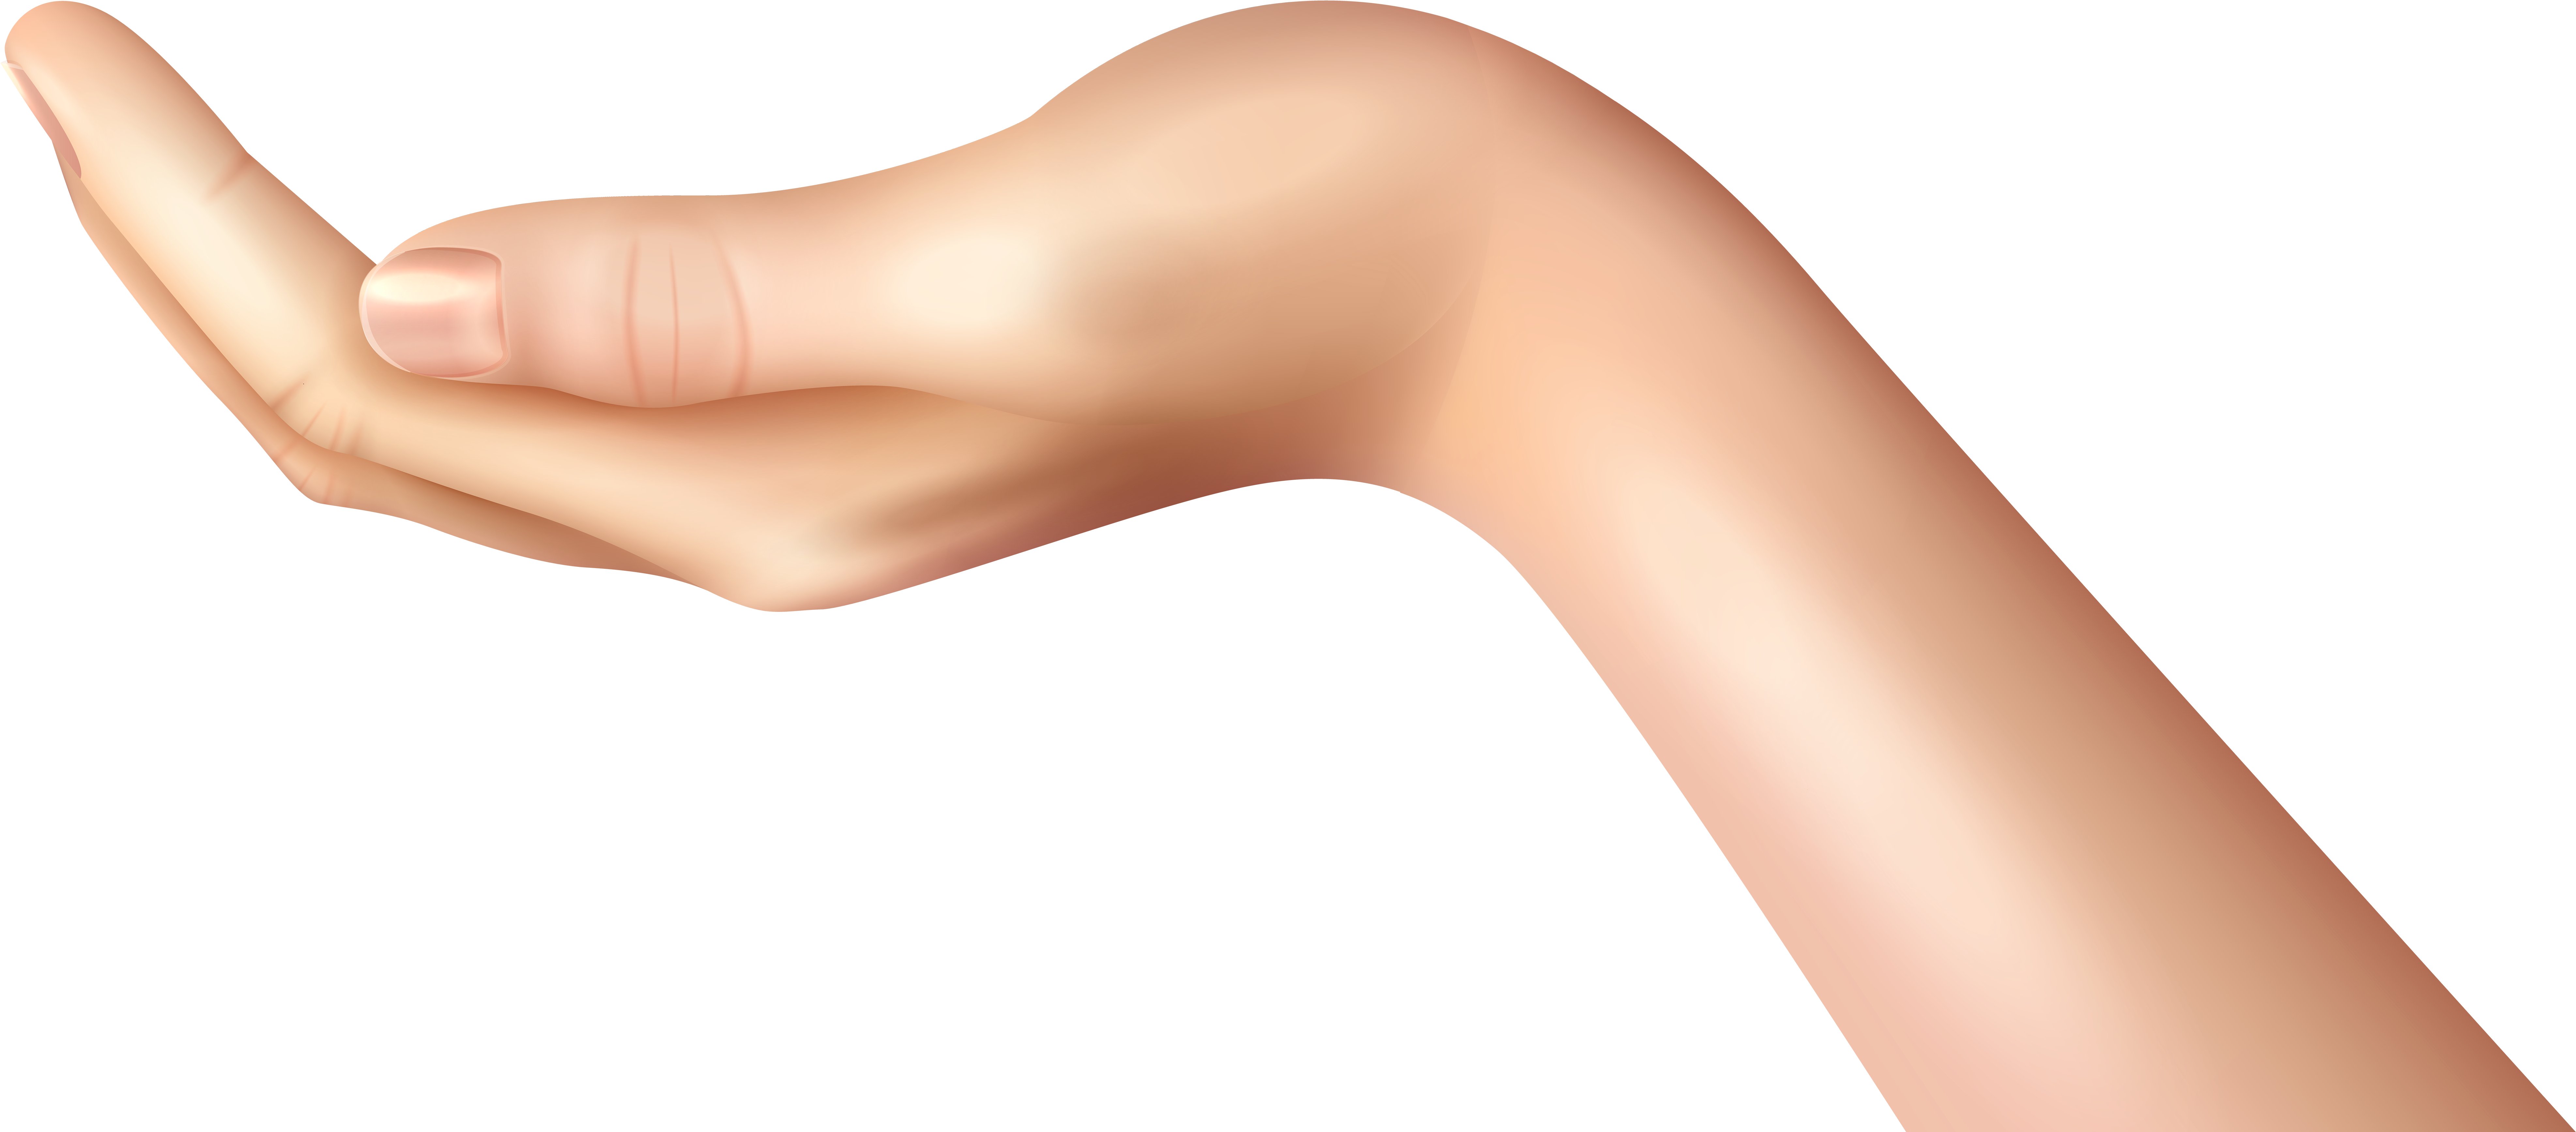 A Close Up Of A Human Arm